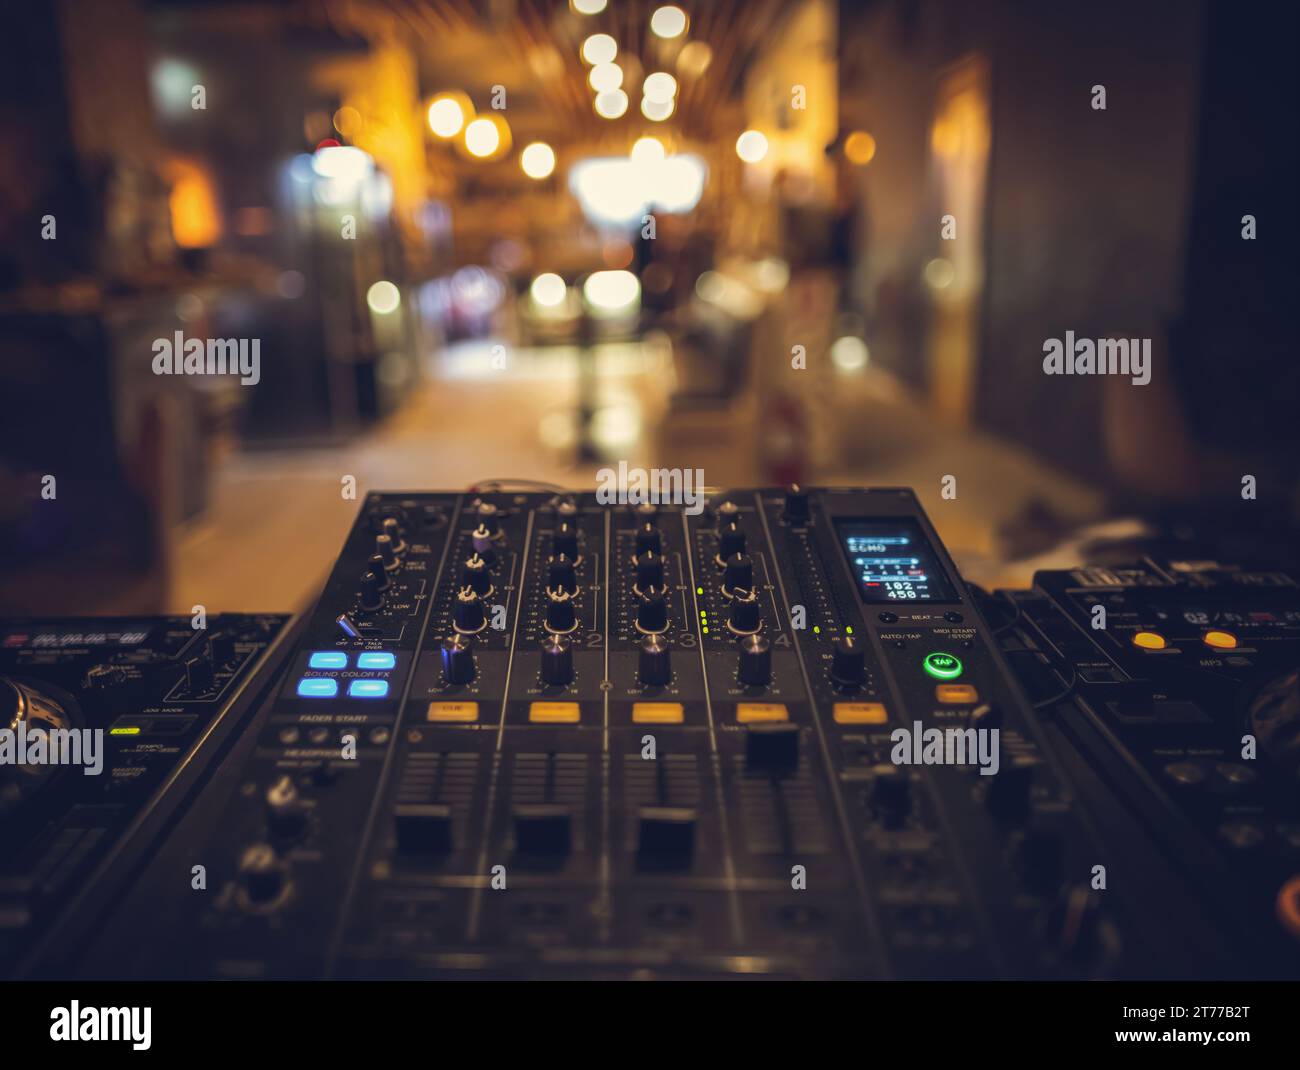 Mixer equipment entertainment DJ station. Club music concept Stock Photo